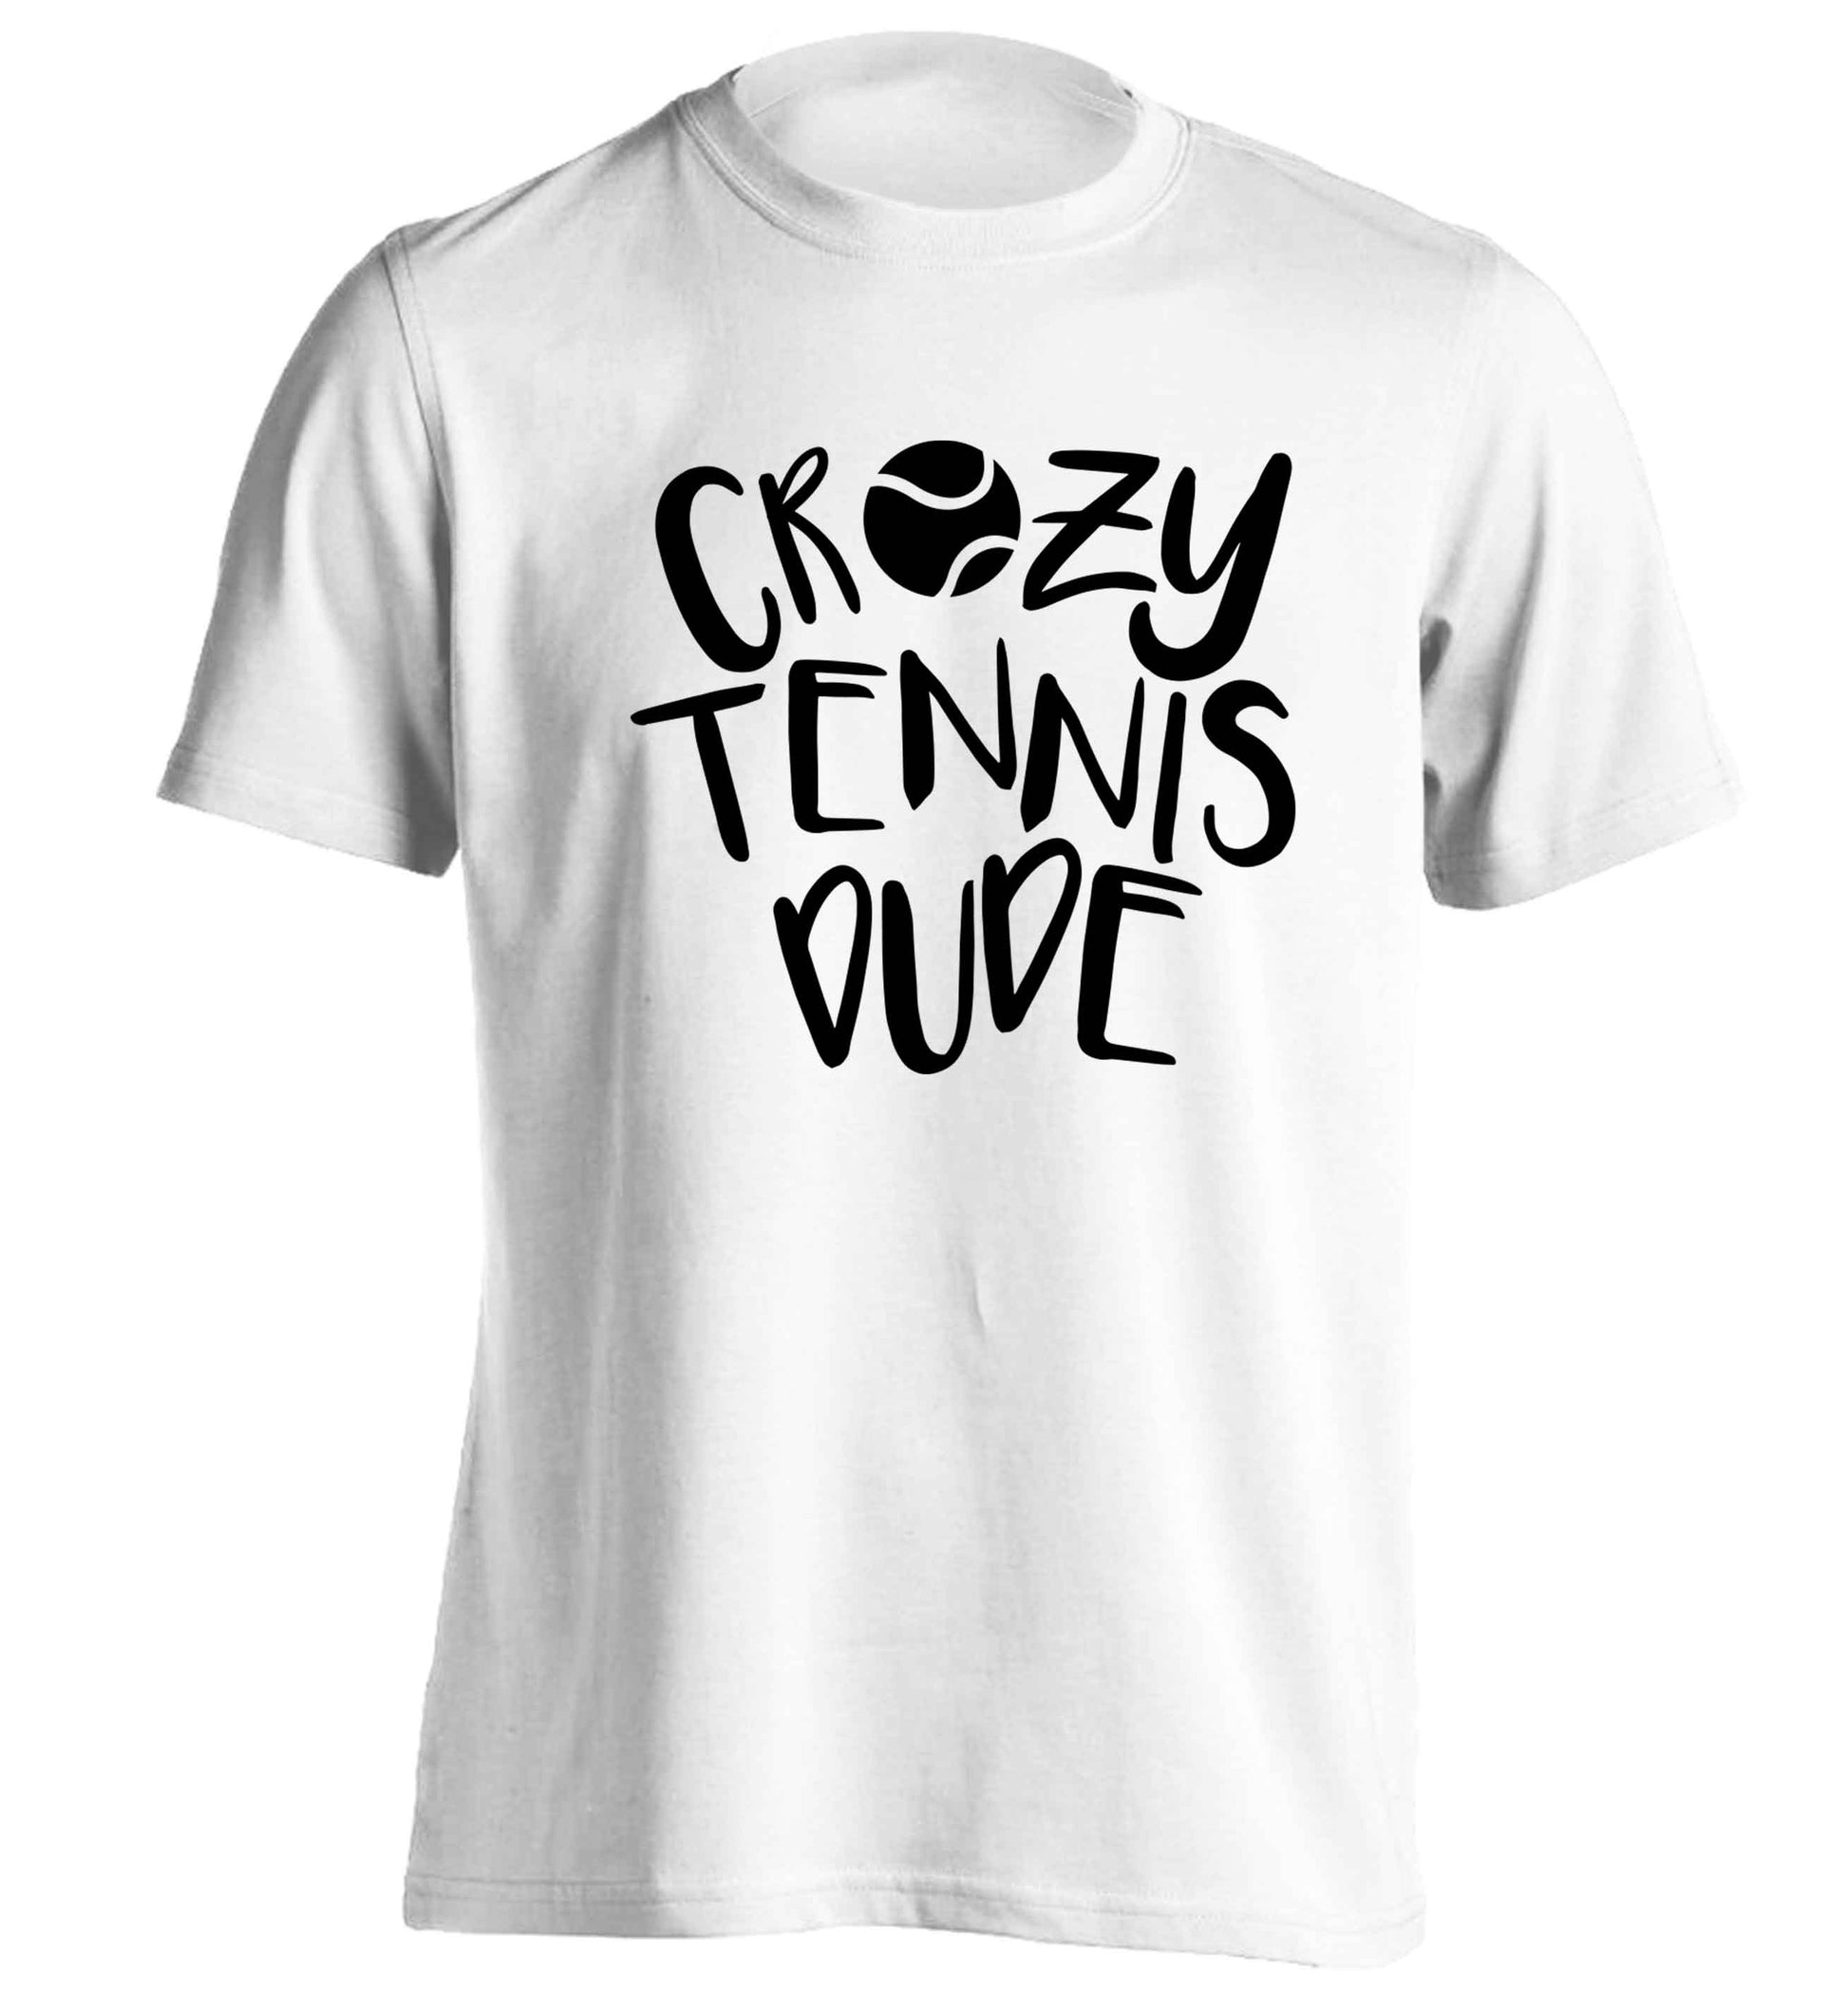 Crazy tennis dude adults unisex white Tshirt 2XL